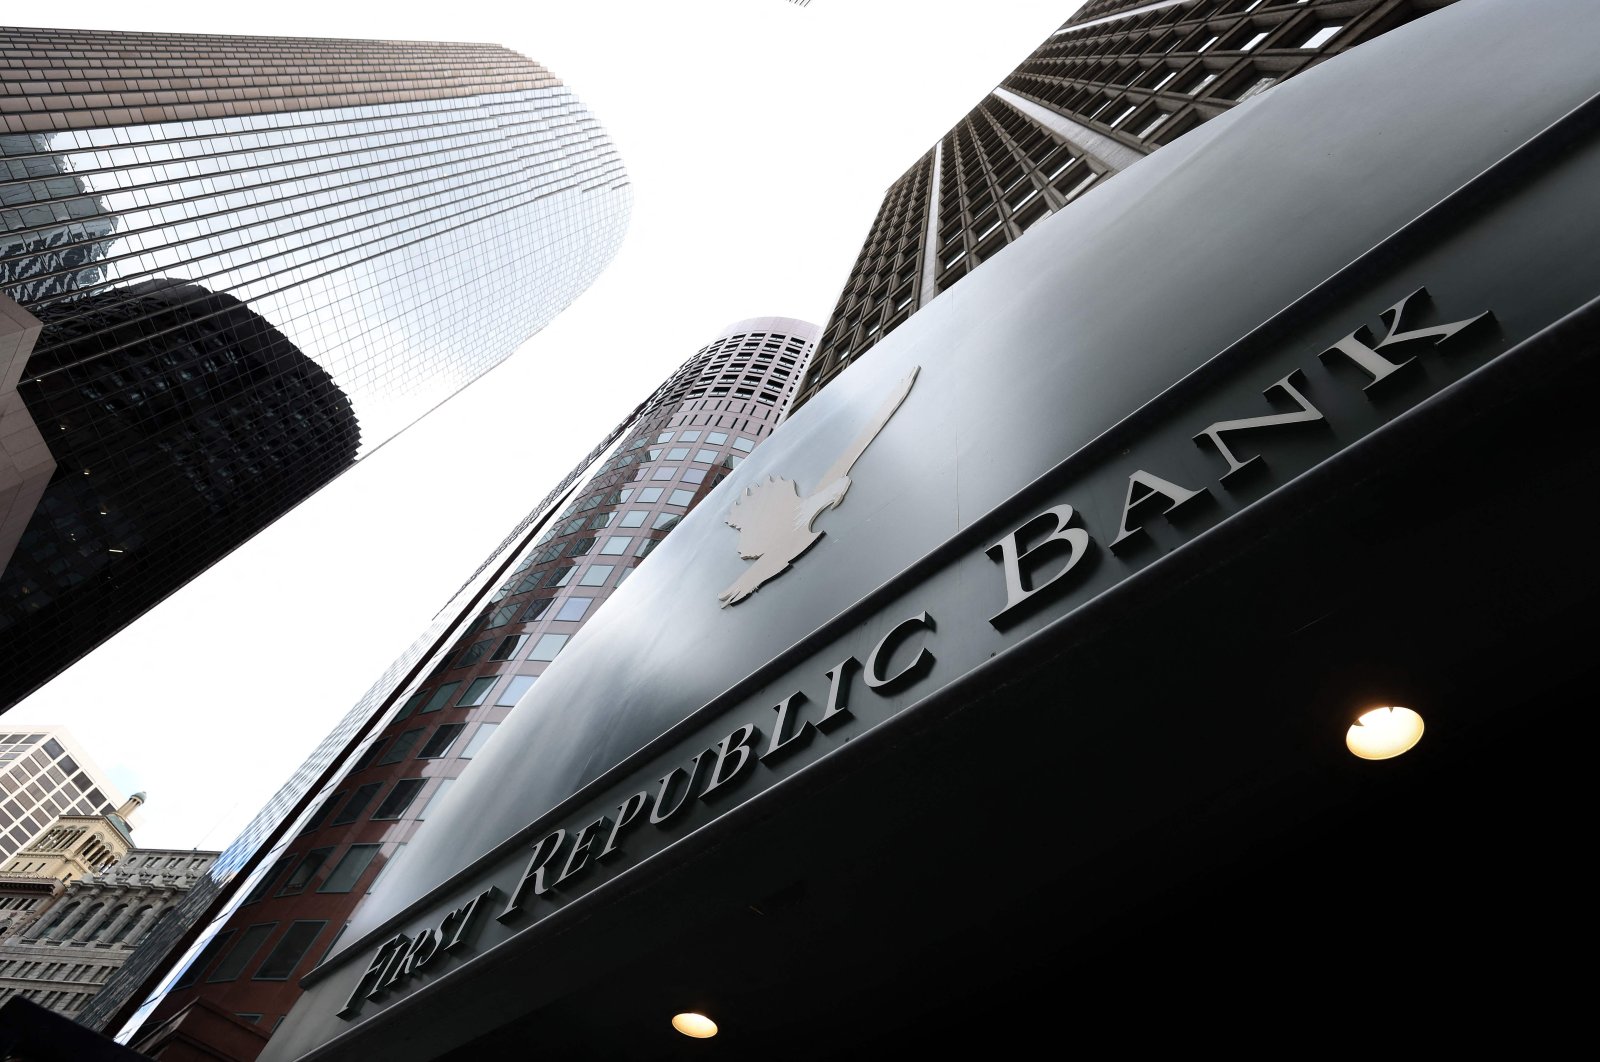 Investor masih khawatir meskipun penyelamatan bank mengurangi kesengsaraan krisis